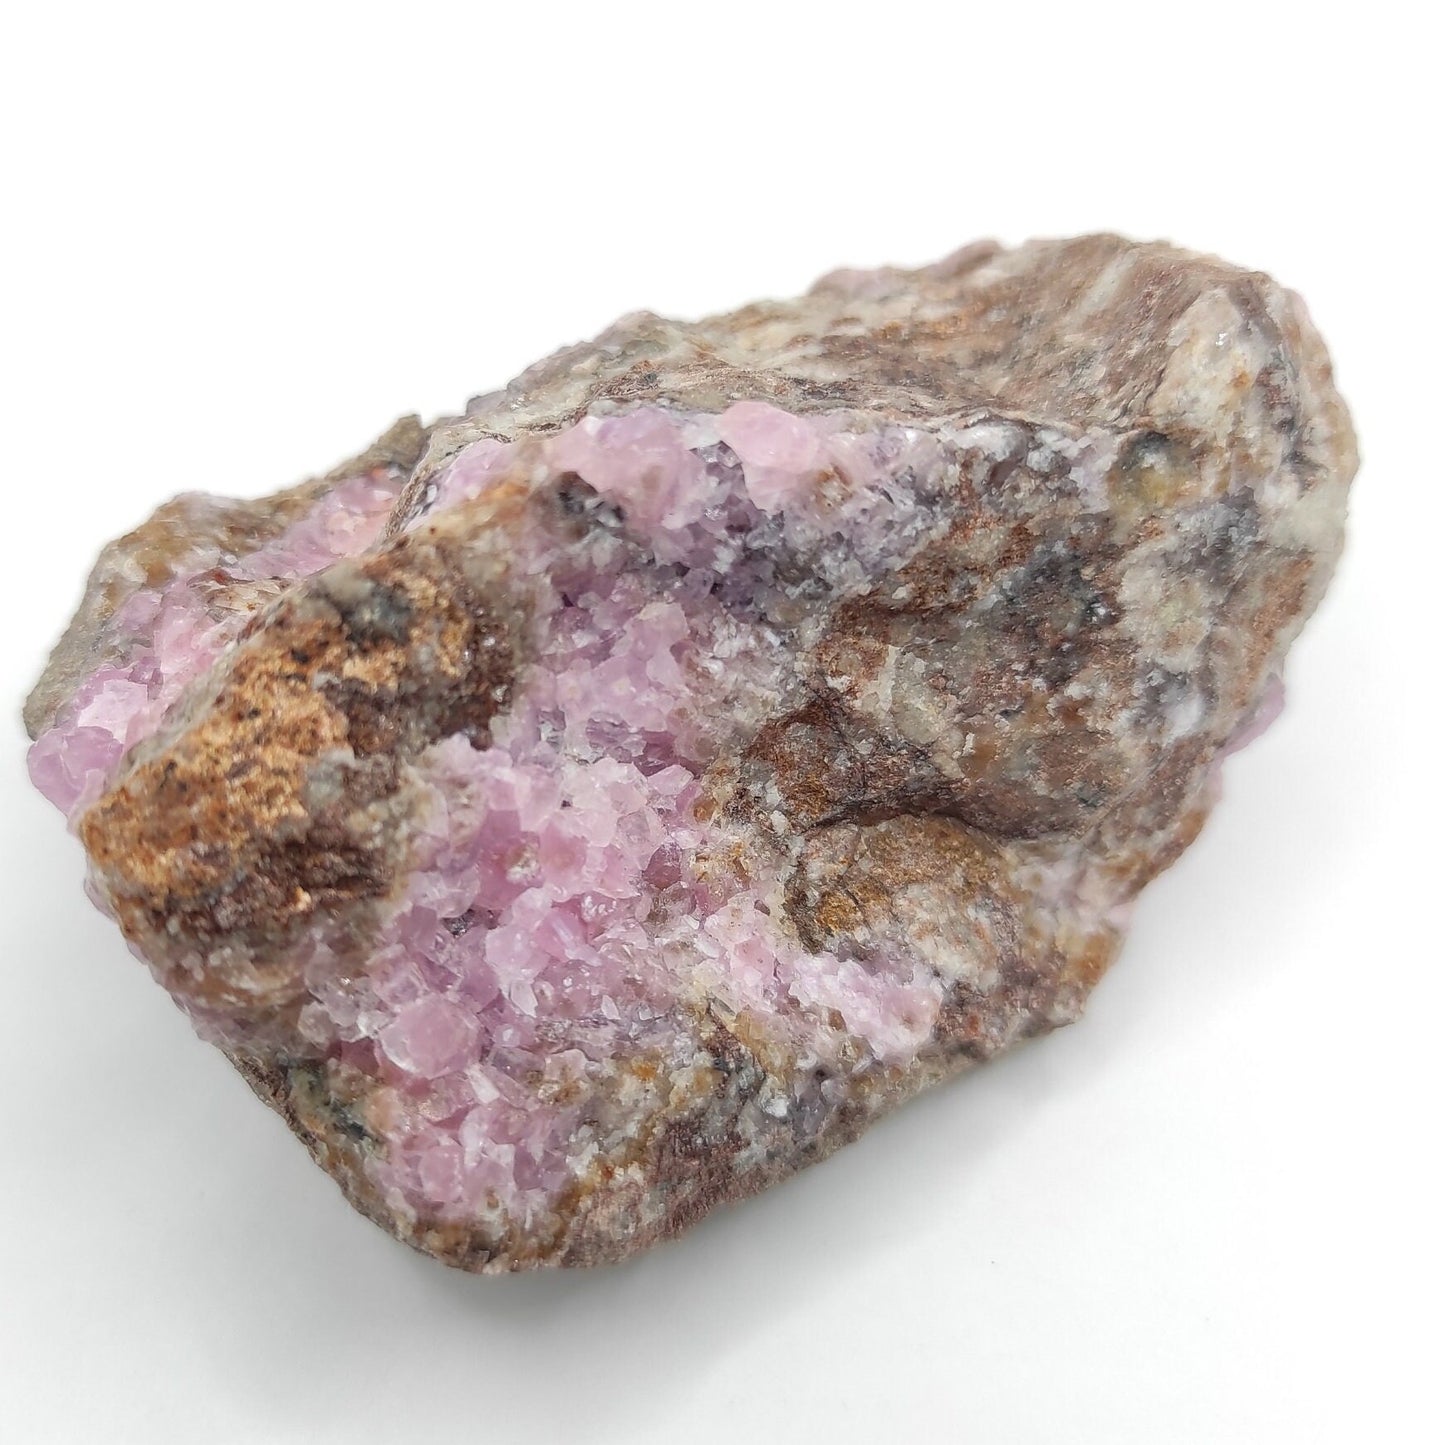 125g Cobalto Calcite in Matrix - Pink Cobalt Calcite from Bou Azzer, Morocco - Salrose Crystal - Cobaltocalcite Mineral Specimen